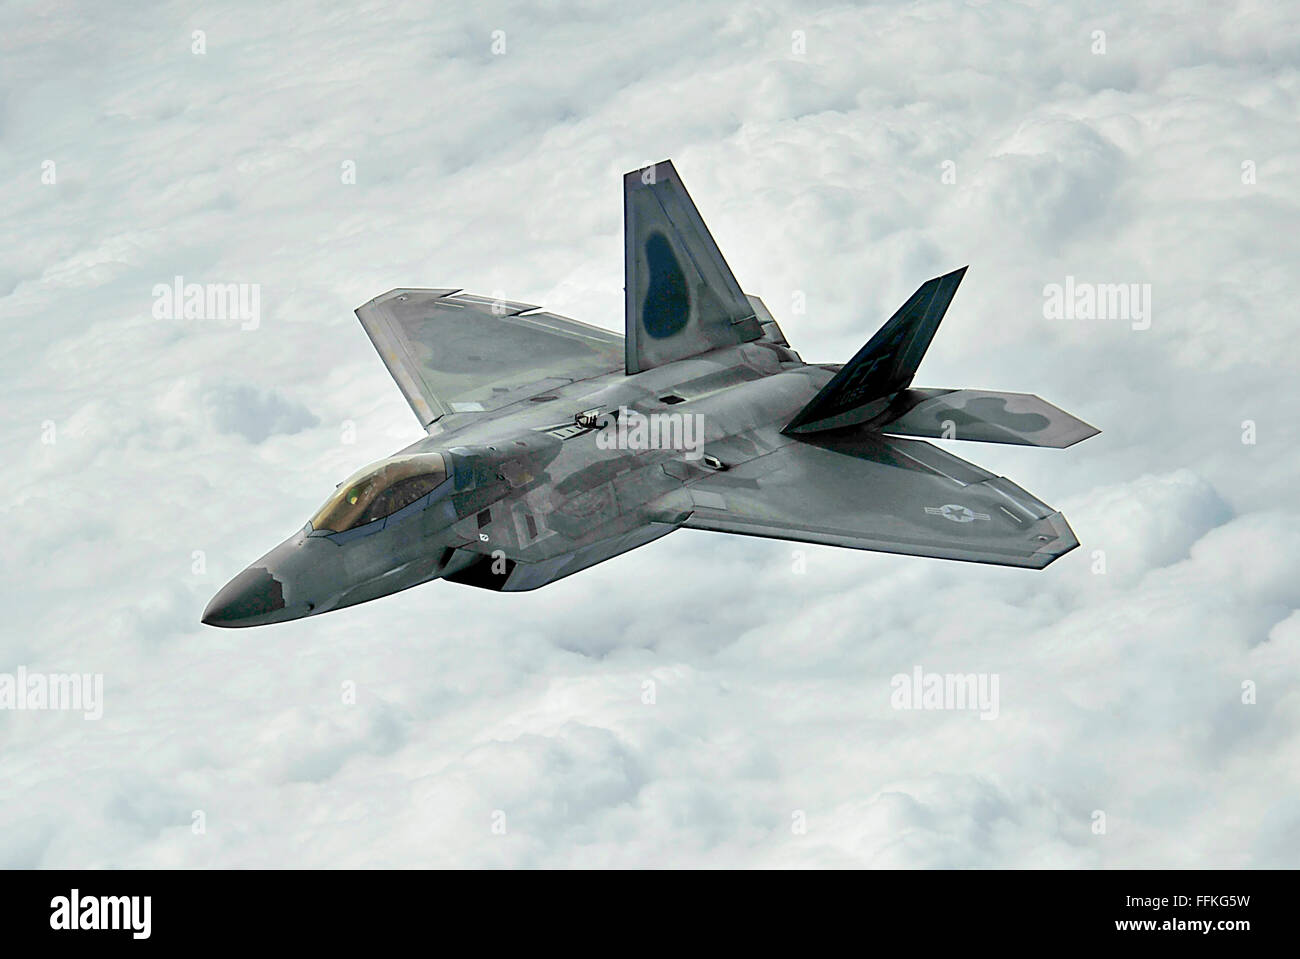 Lockheed Martin F-22 Raptor, Stealth Fighter Aircraft della US Air Force. Foto di USAF Foto Stock